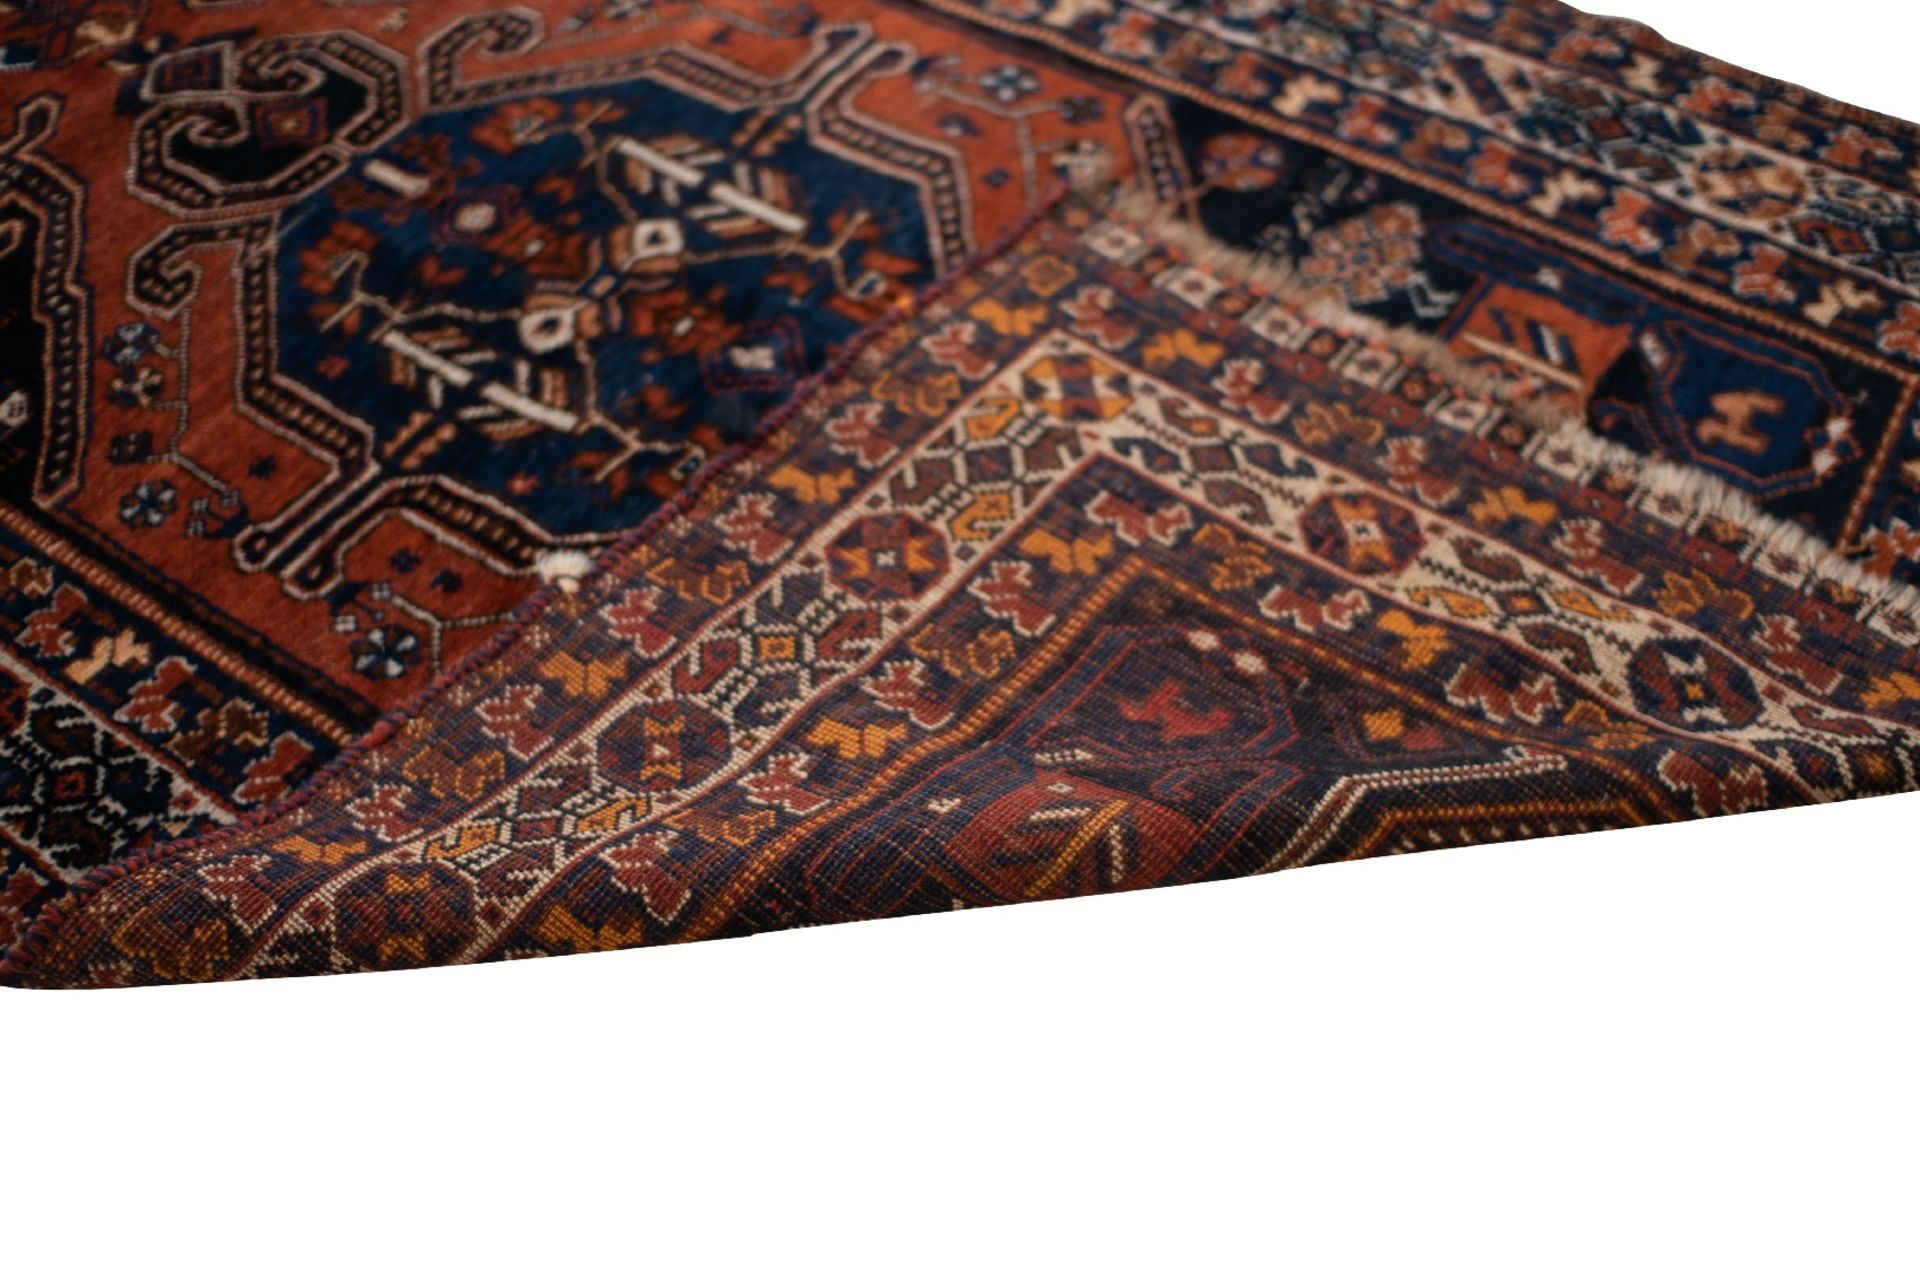 Shiraz Teppich | Shiraz carpet - Image 4 of 4